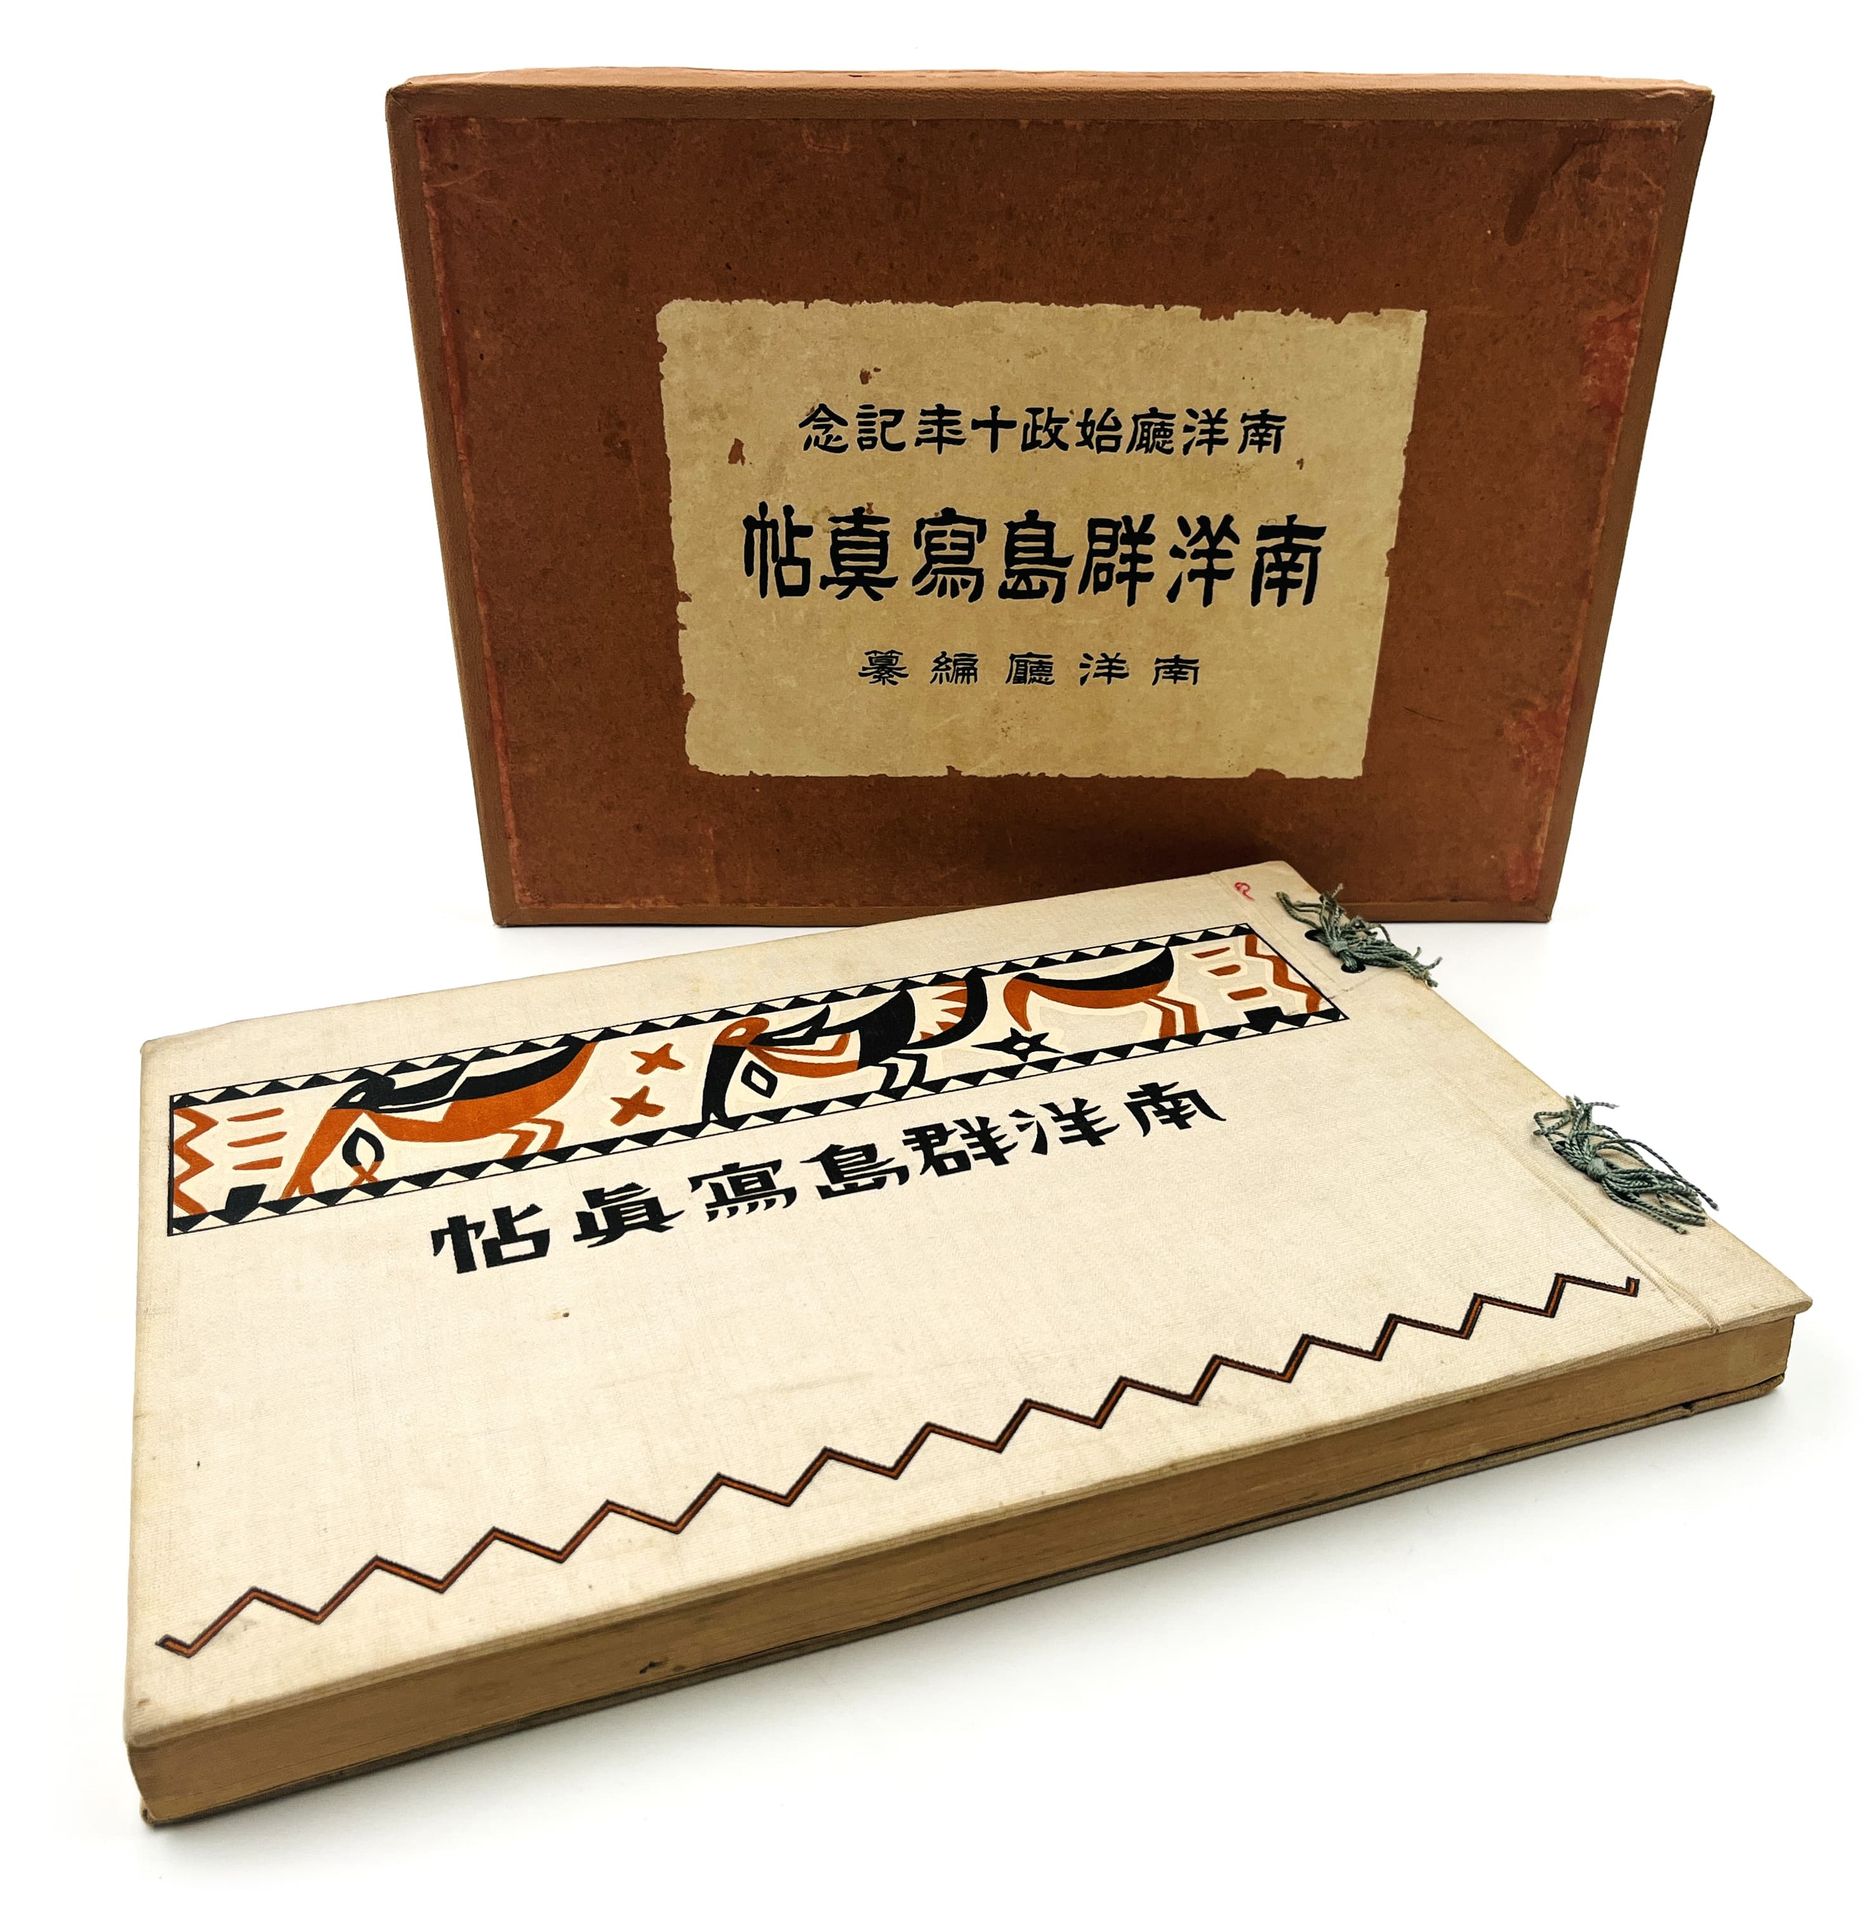 HASHIMOTO, Tamotsu 纪念南太平洋机构成立10周年。南太平洋群岛的相册（完全用日语印刷）。塞班岛，南太平洋机构，1932年。长方形对开画册(26&hellip;